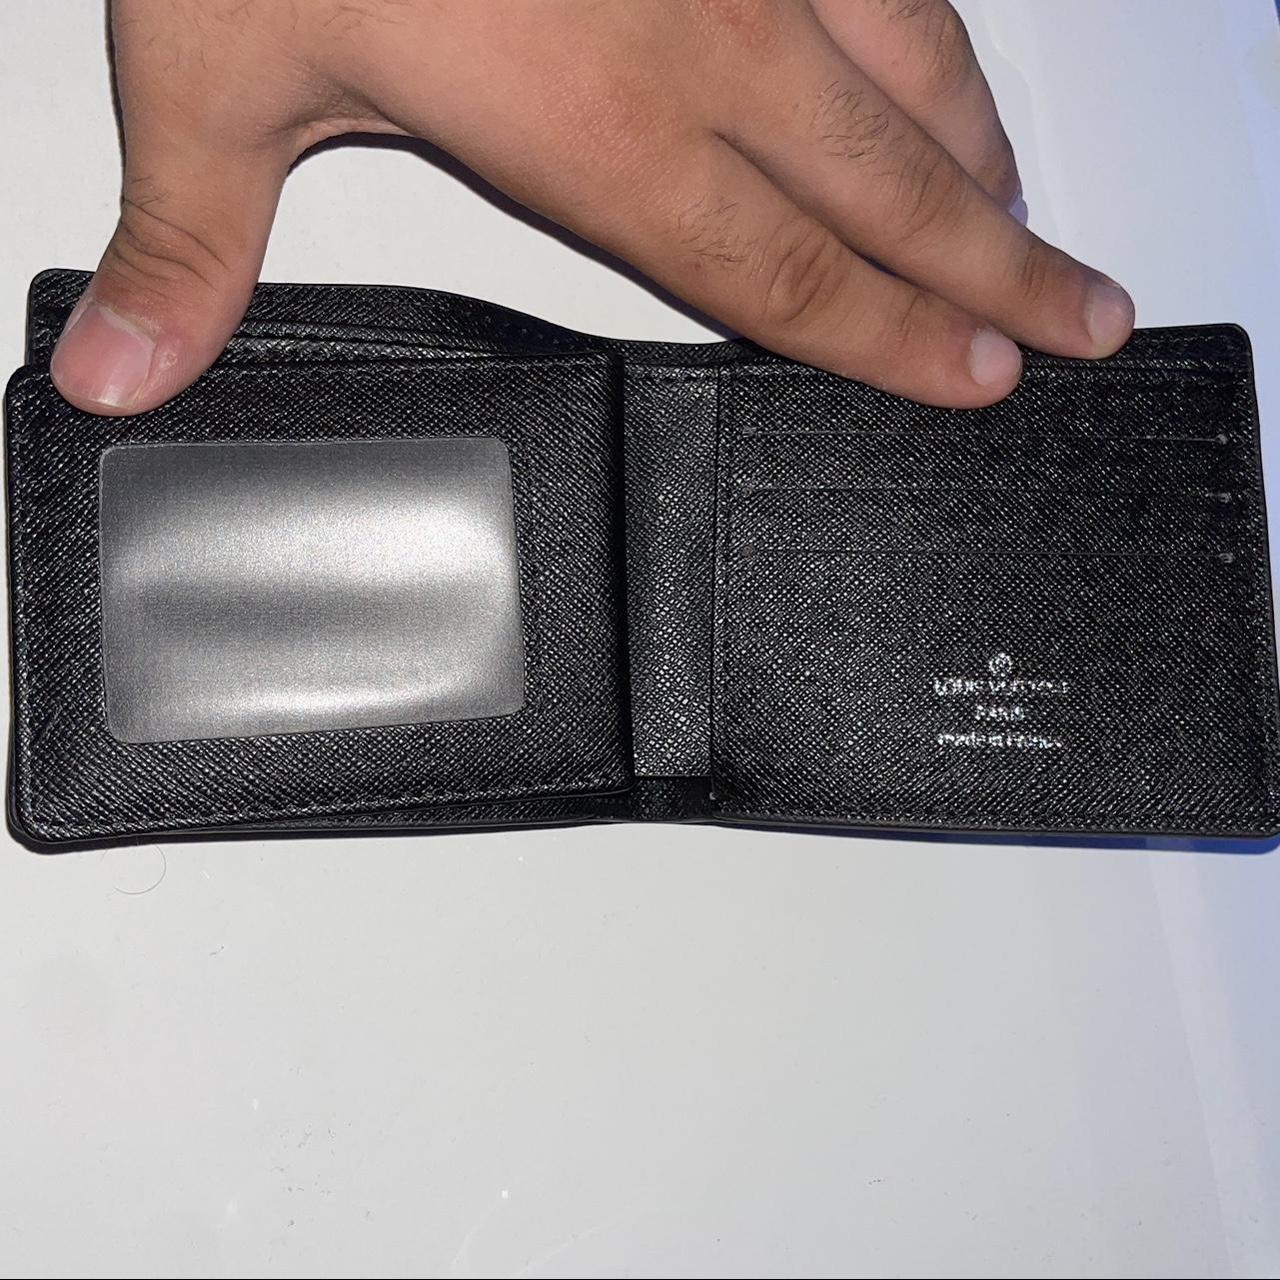 Shop Louis Vuitton Slender wallet (M62294) by えぷた